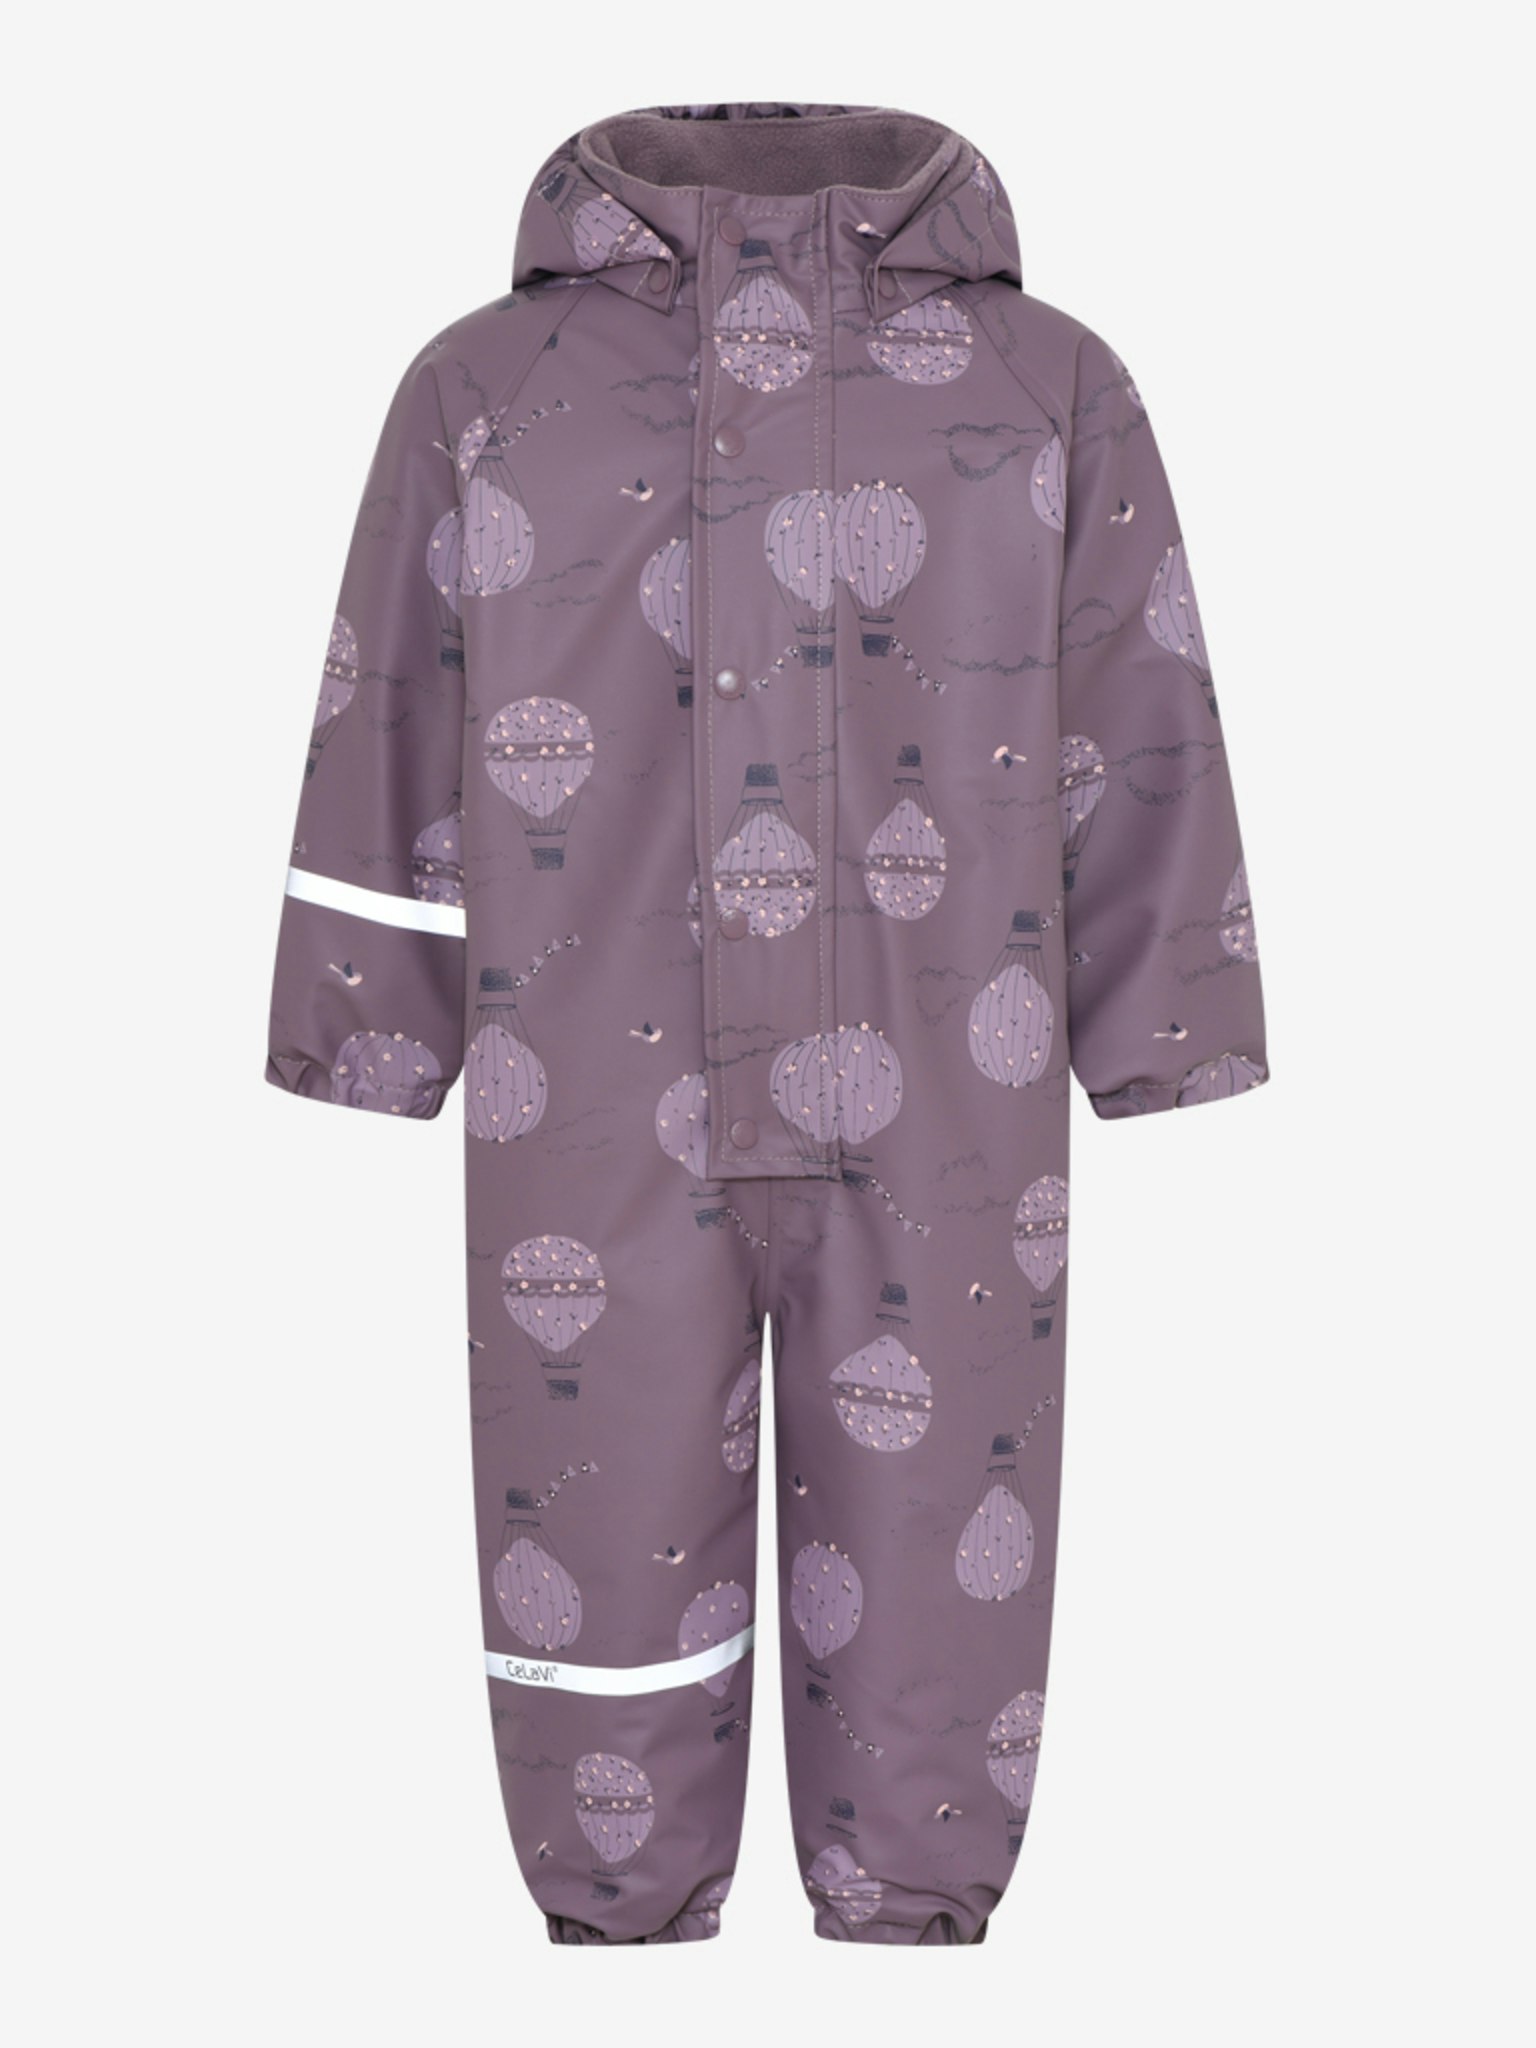 CeLaVi - Rainwear Suit -AOP, W.Fleece/ Regnoverall med fleecefoder- Moonscape